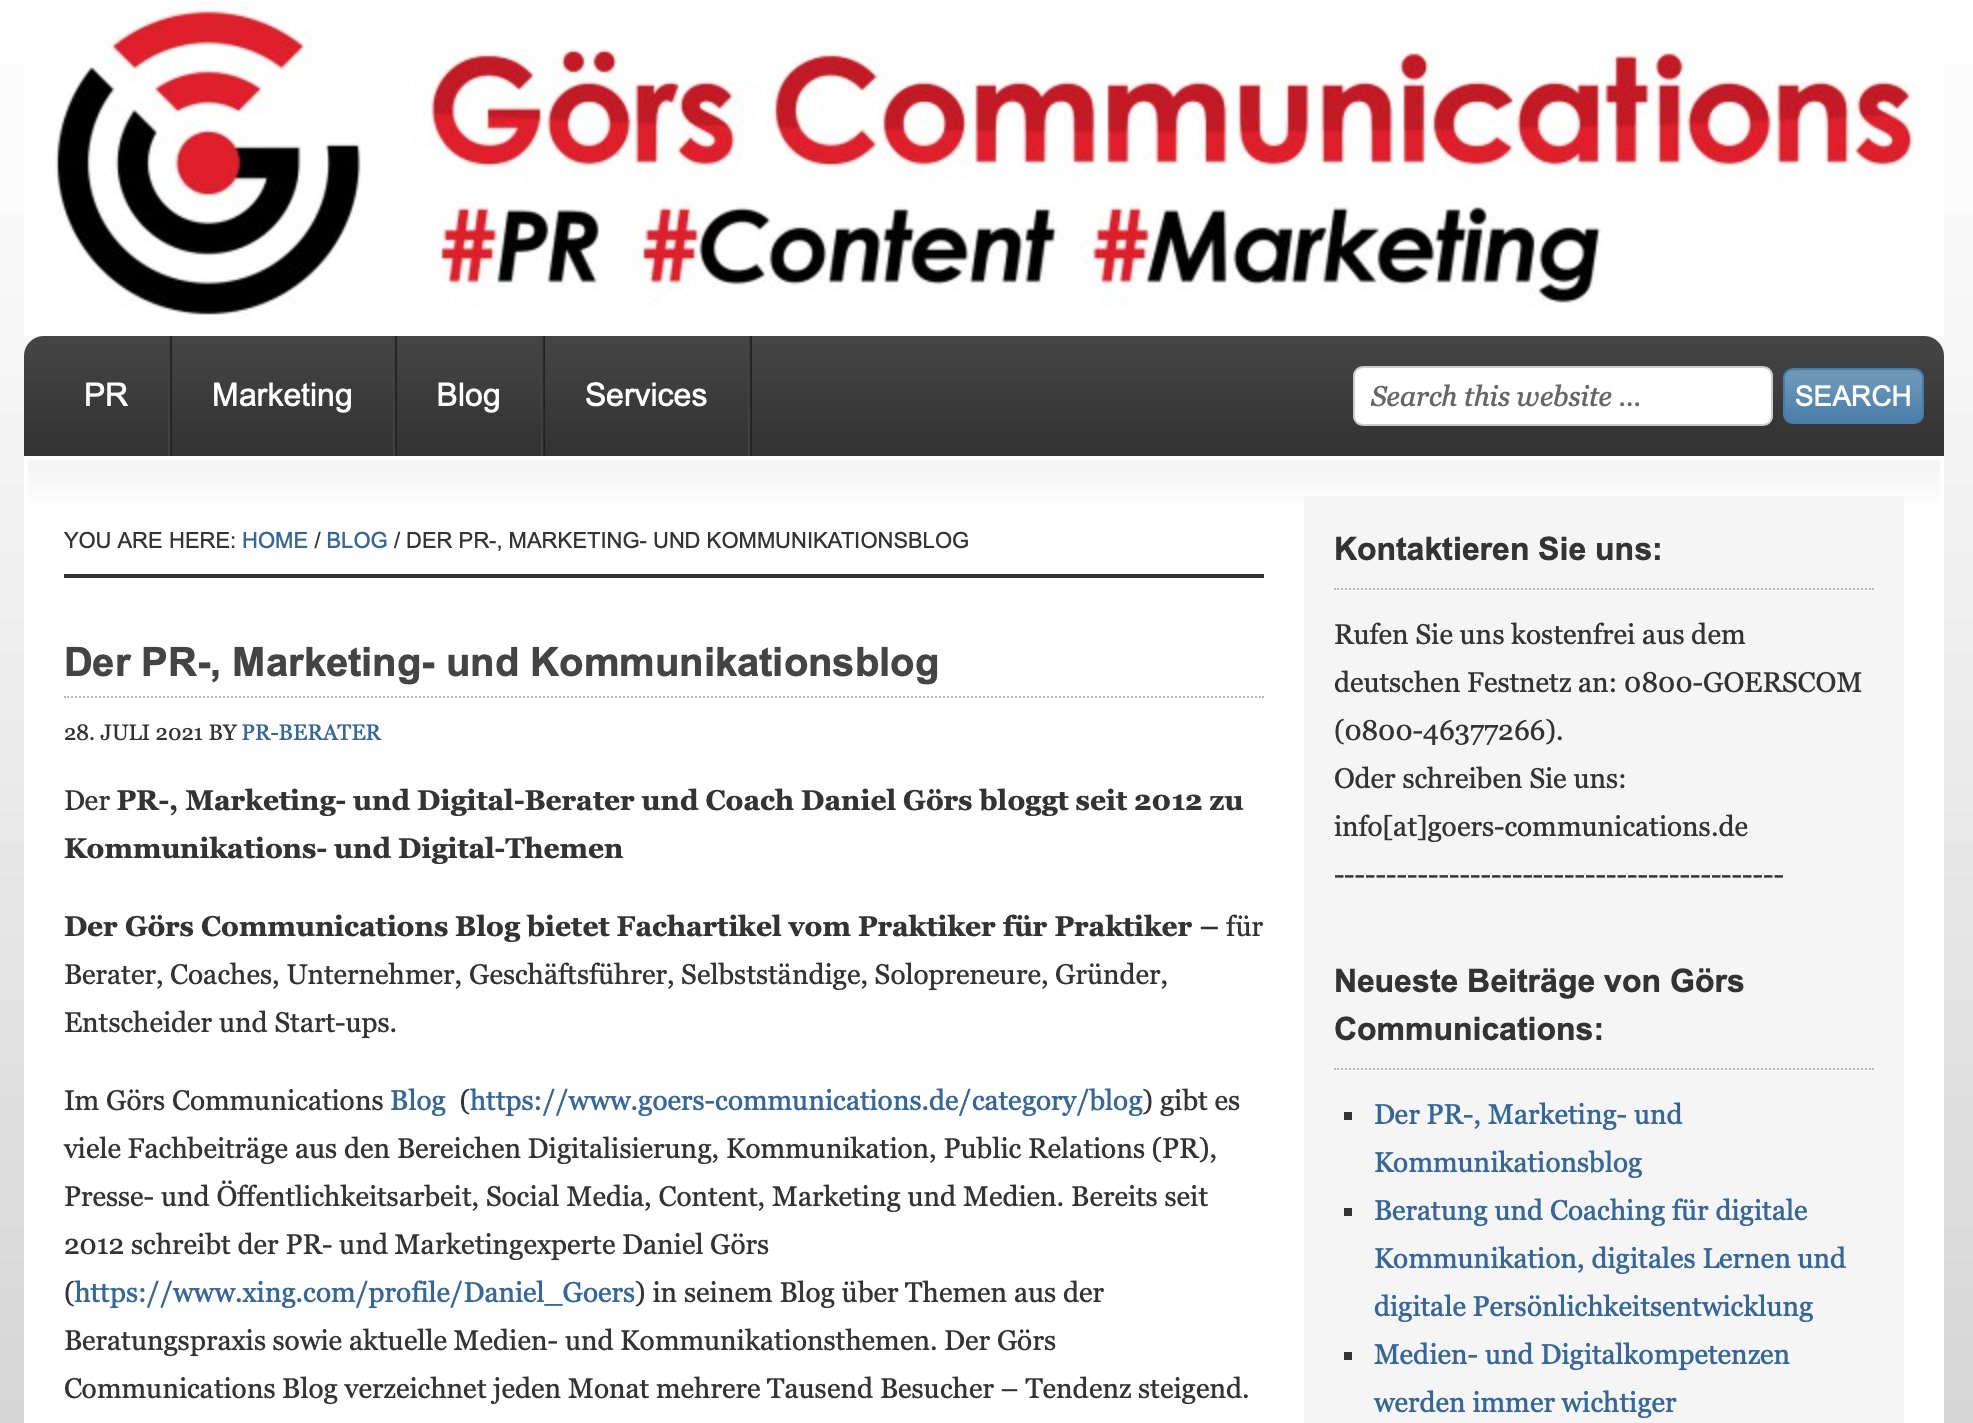 Görs Communications – der PR-, Marketing- und Kommunikationsblog